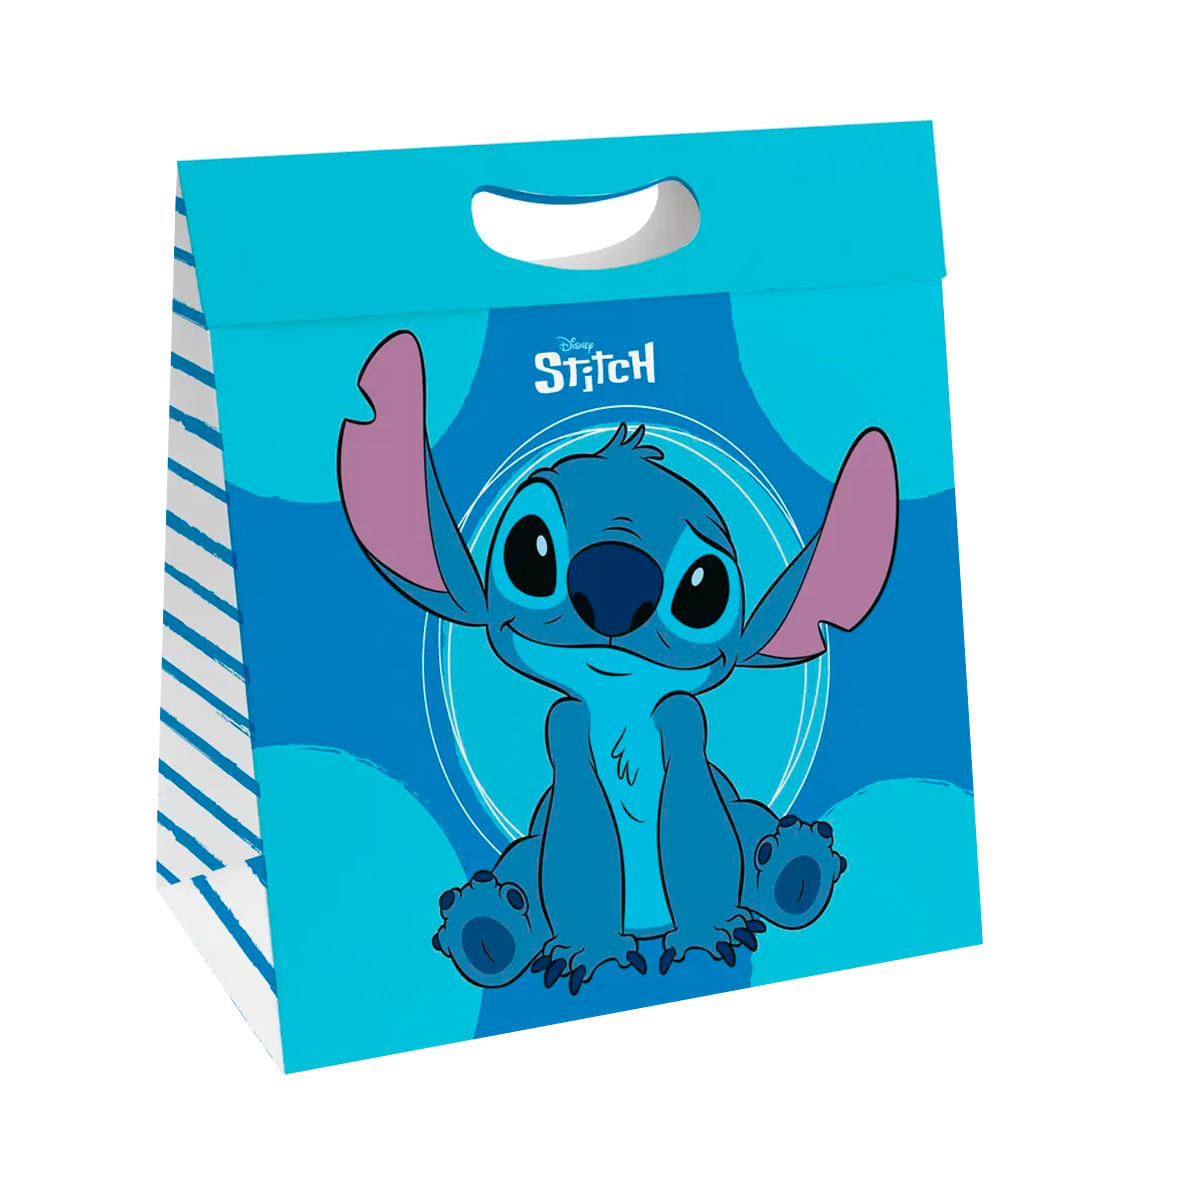 9554 - Caixa de Presente New Plus Stitch M Cromus